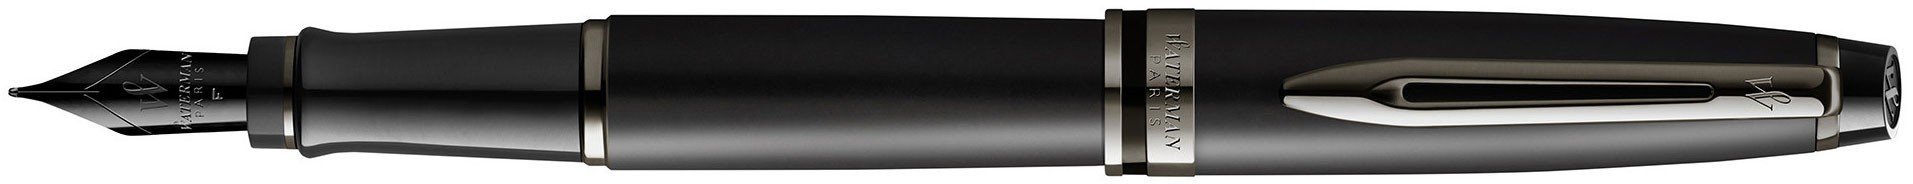 Ручка перьевая Waterman Expert DeLuxe Metallic Black RT F перо сталь